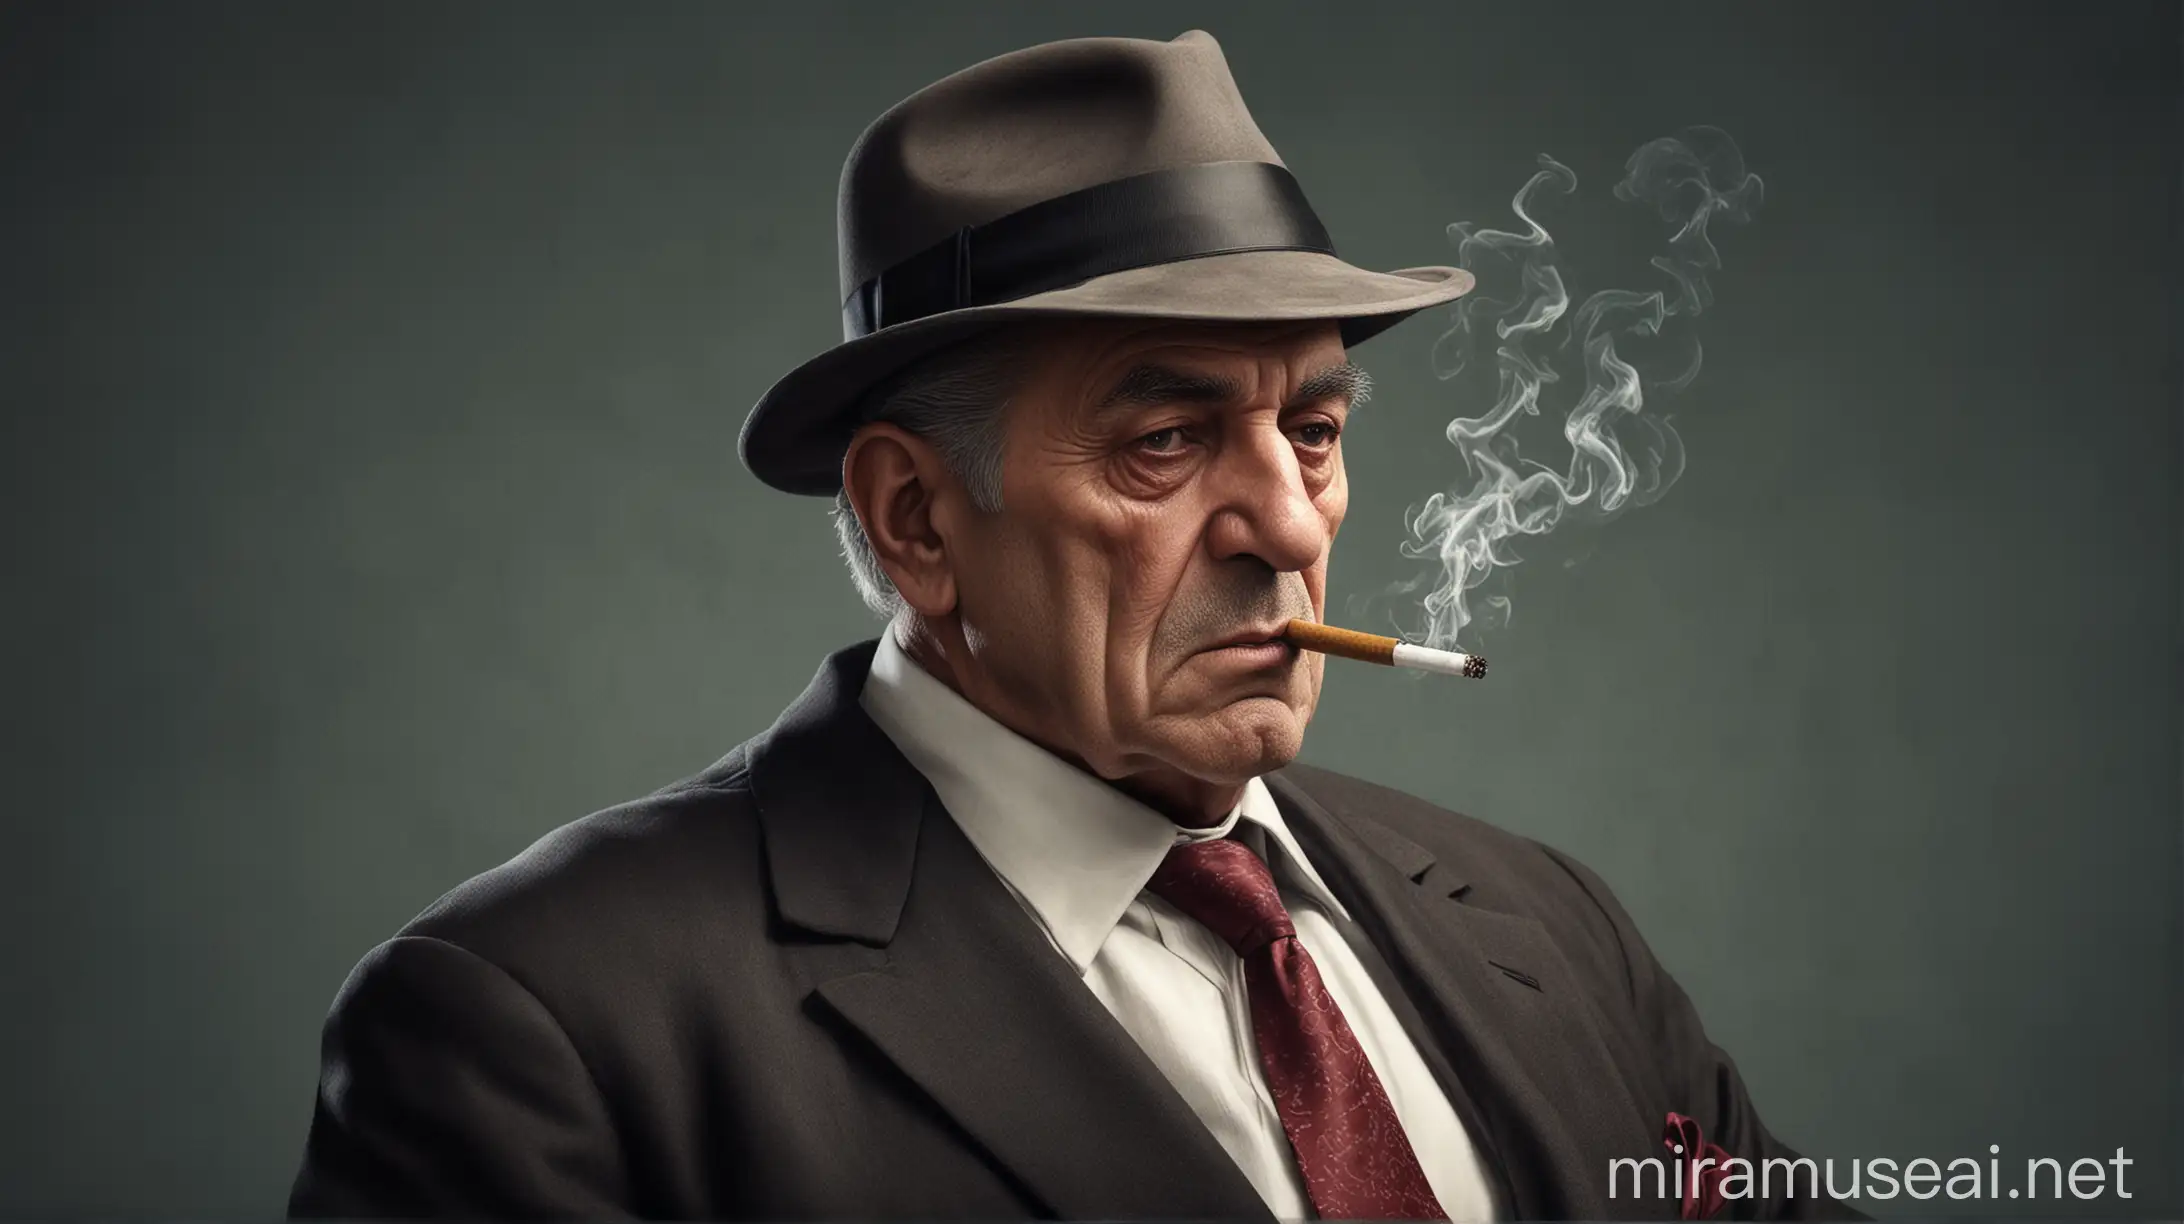 Senior Mob Boss Smoking a Cigar in a Vintage Setting